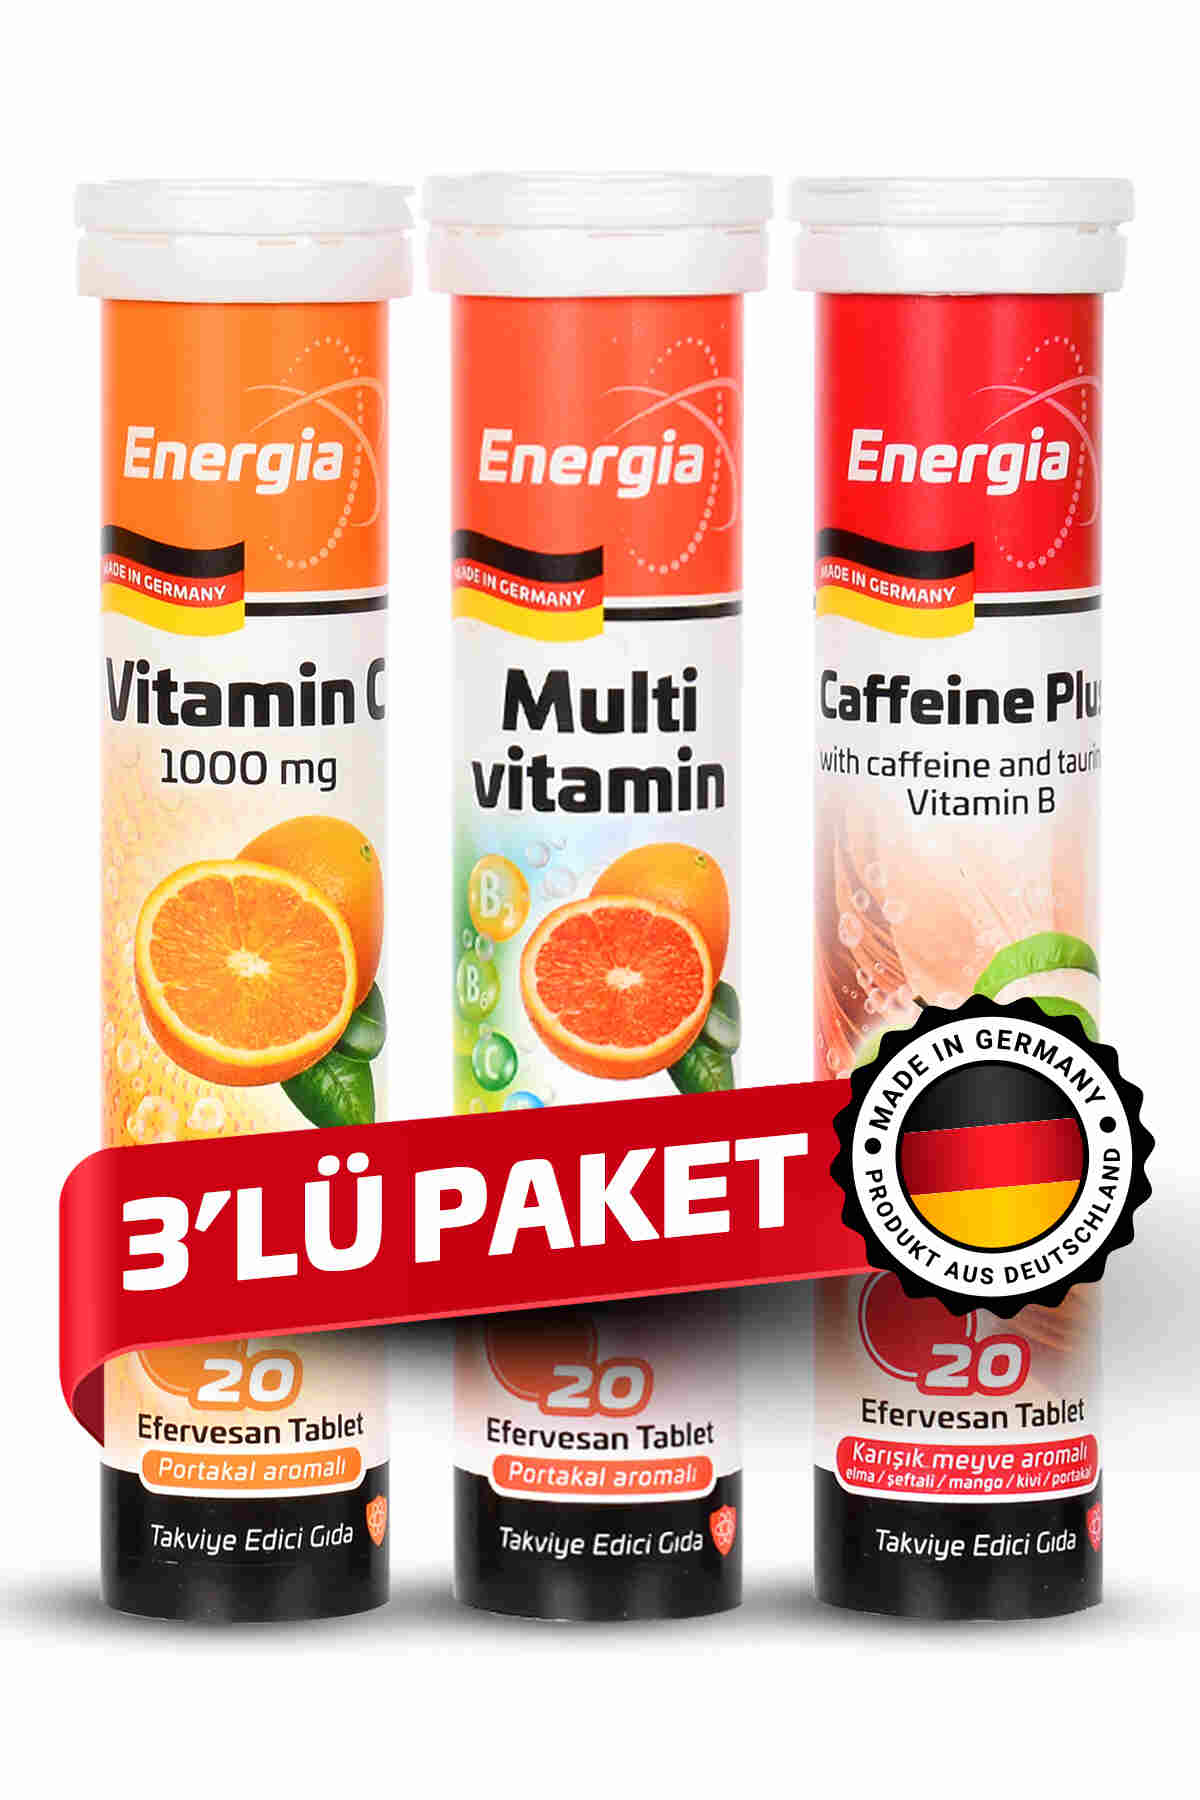 Energia® Vitamin C + Multivitamin + Caffeine Plus Efervesan Tablet Takviye Edici Gıda